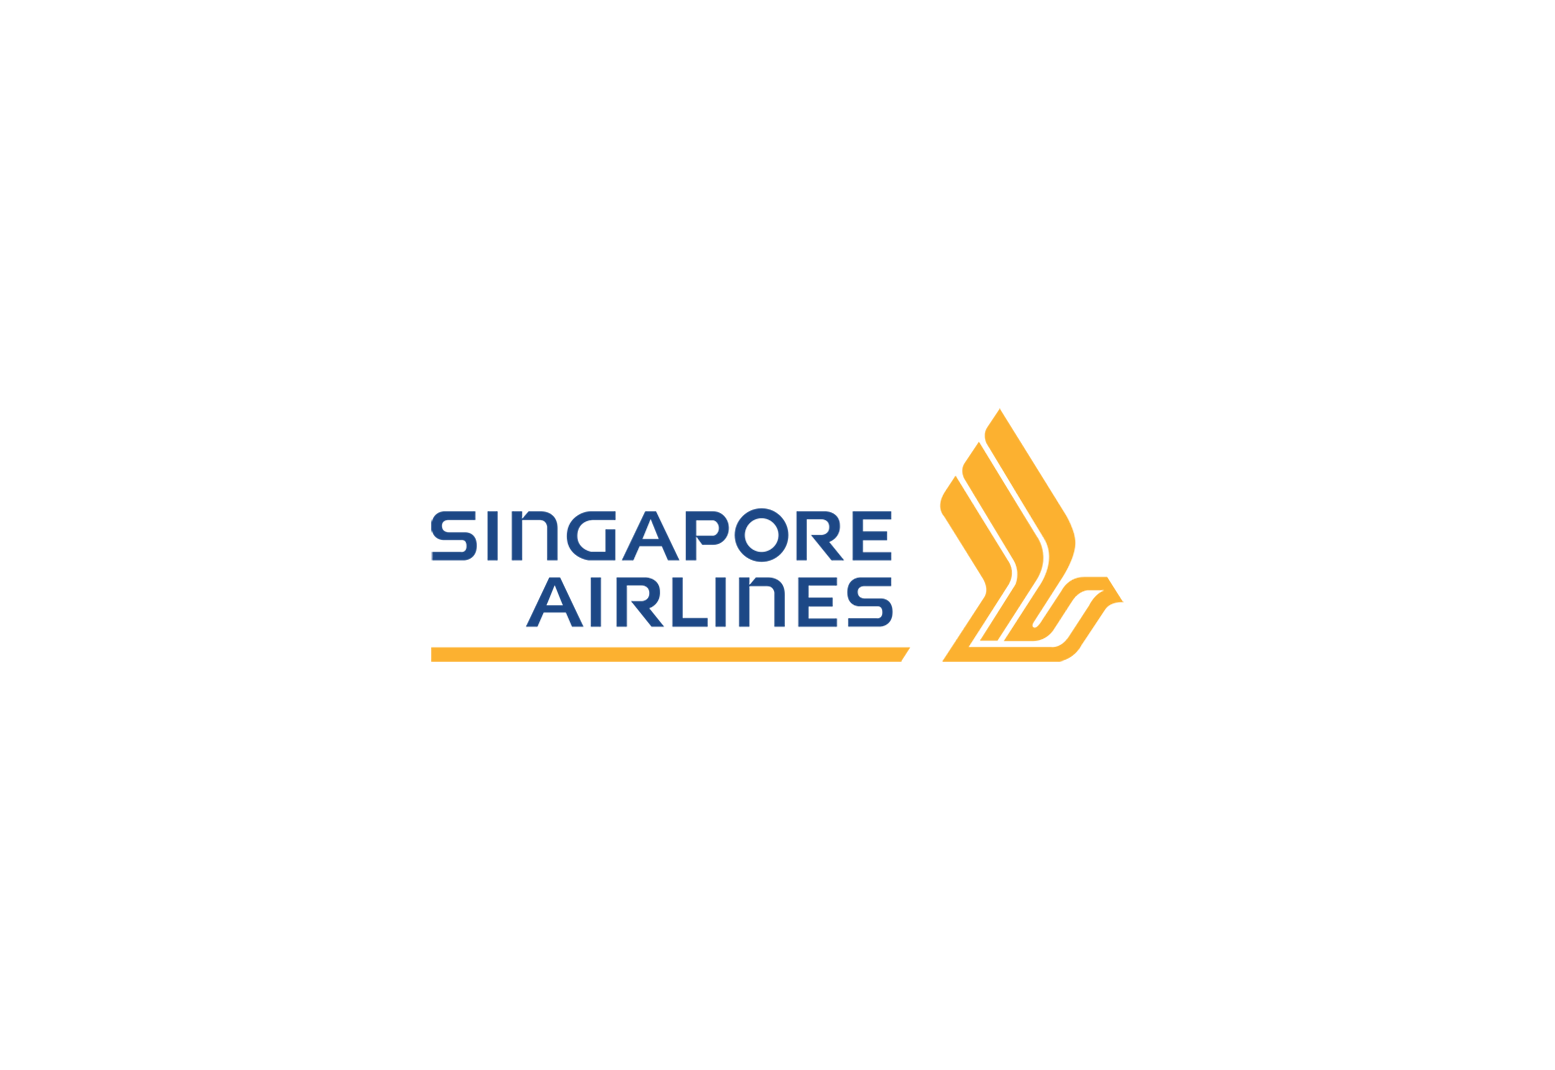 Singapore Airlines logo.